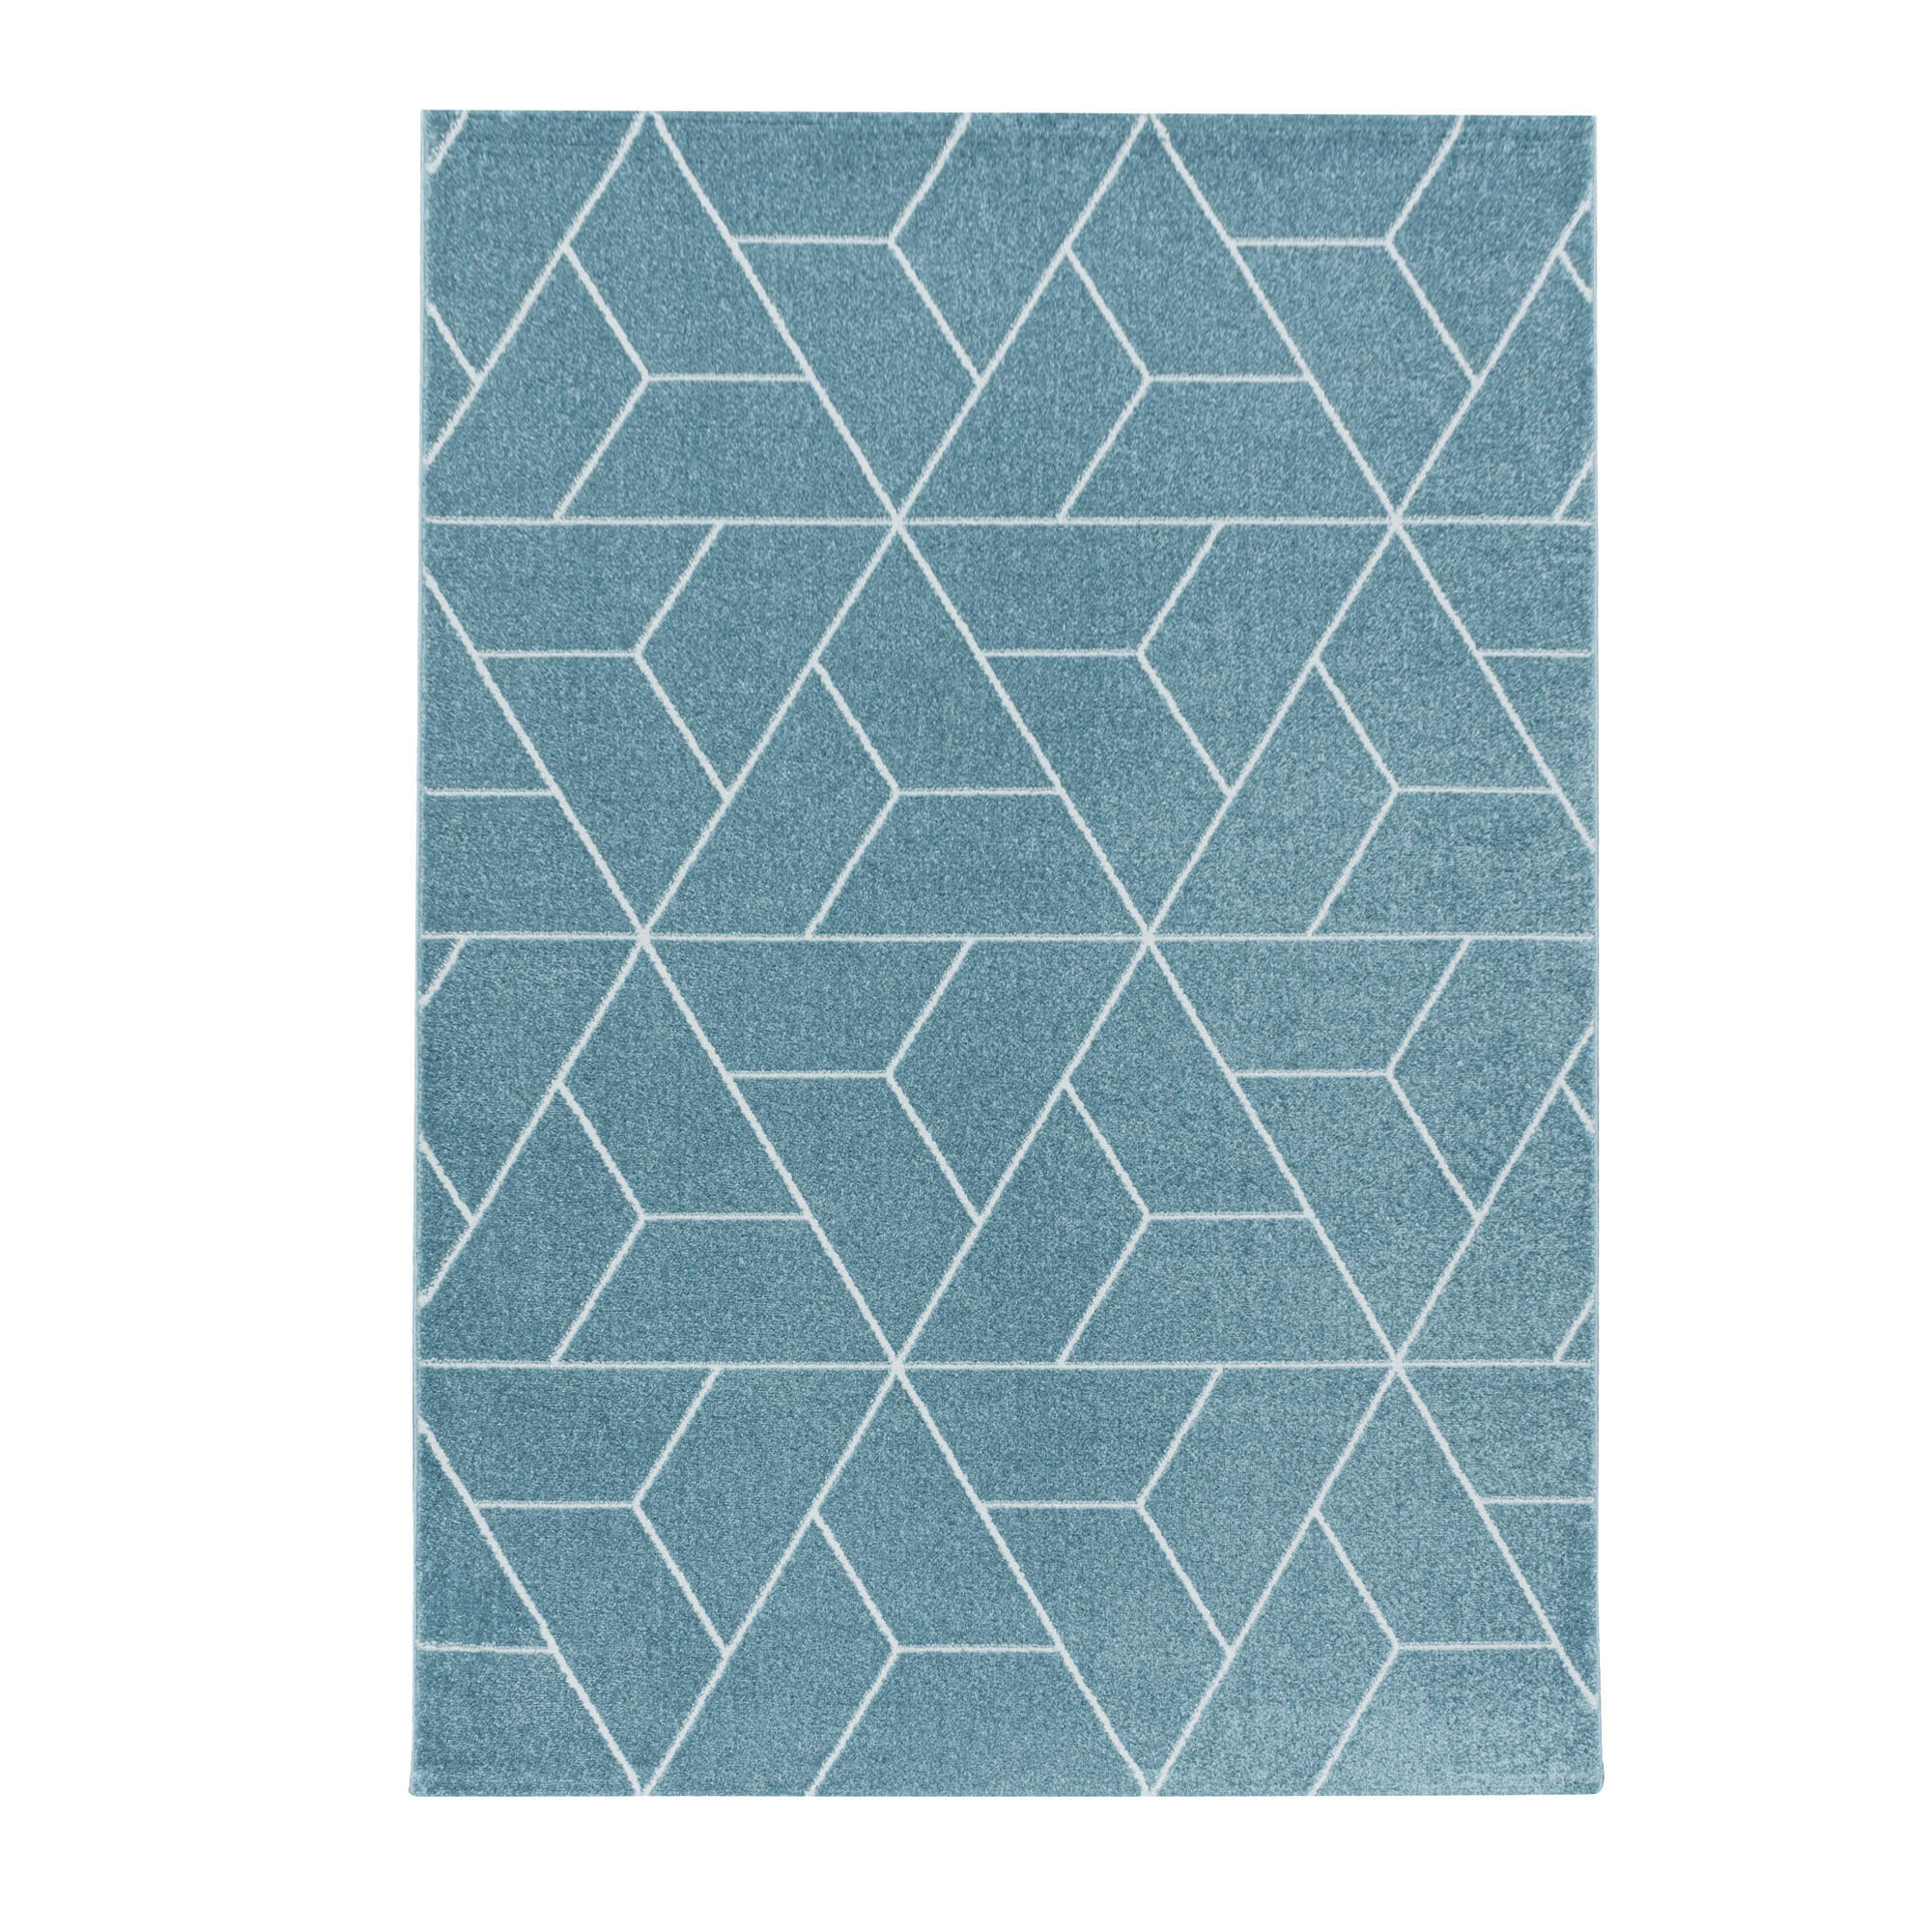 WEBTEPPICH 80/150 cm Efor 3715 blau  - Blau, Design, Textil (80/150cm) - Novel